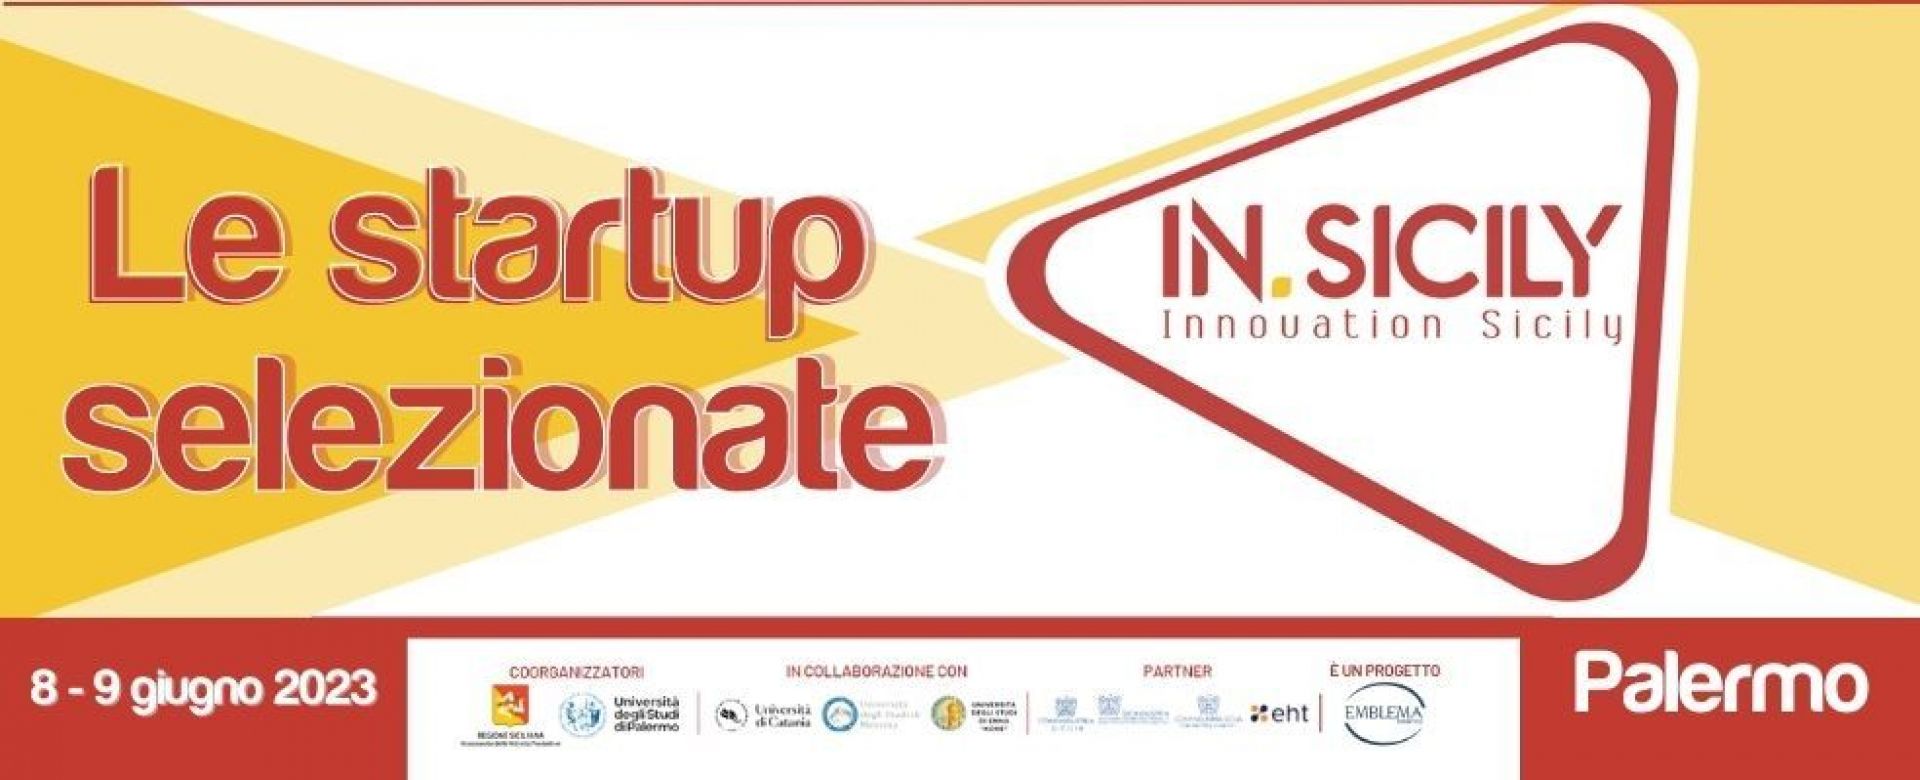 08.05.2023 - In.Sicily | Esito Manifestazione d'interesse Start up innovative